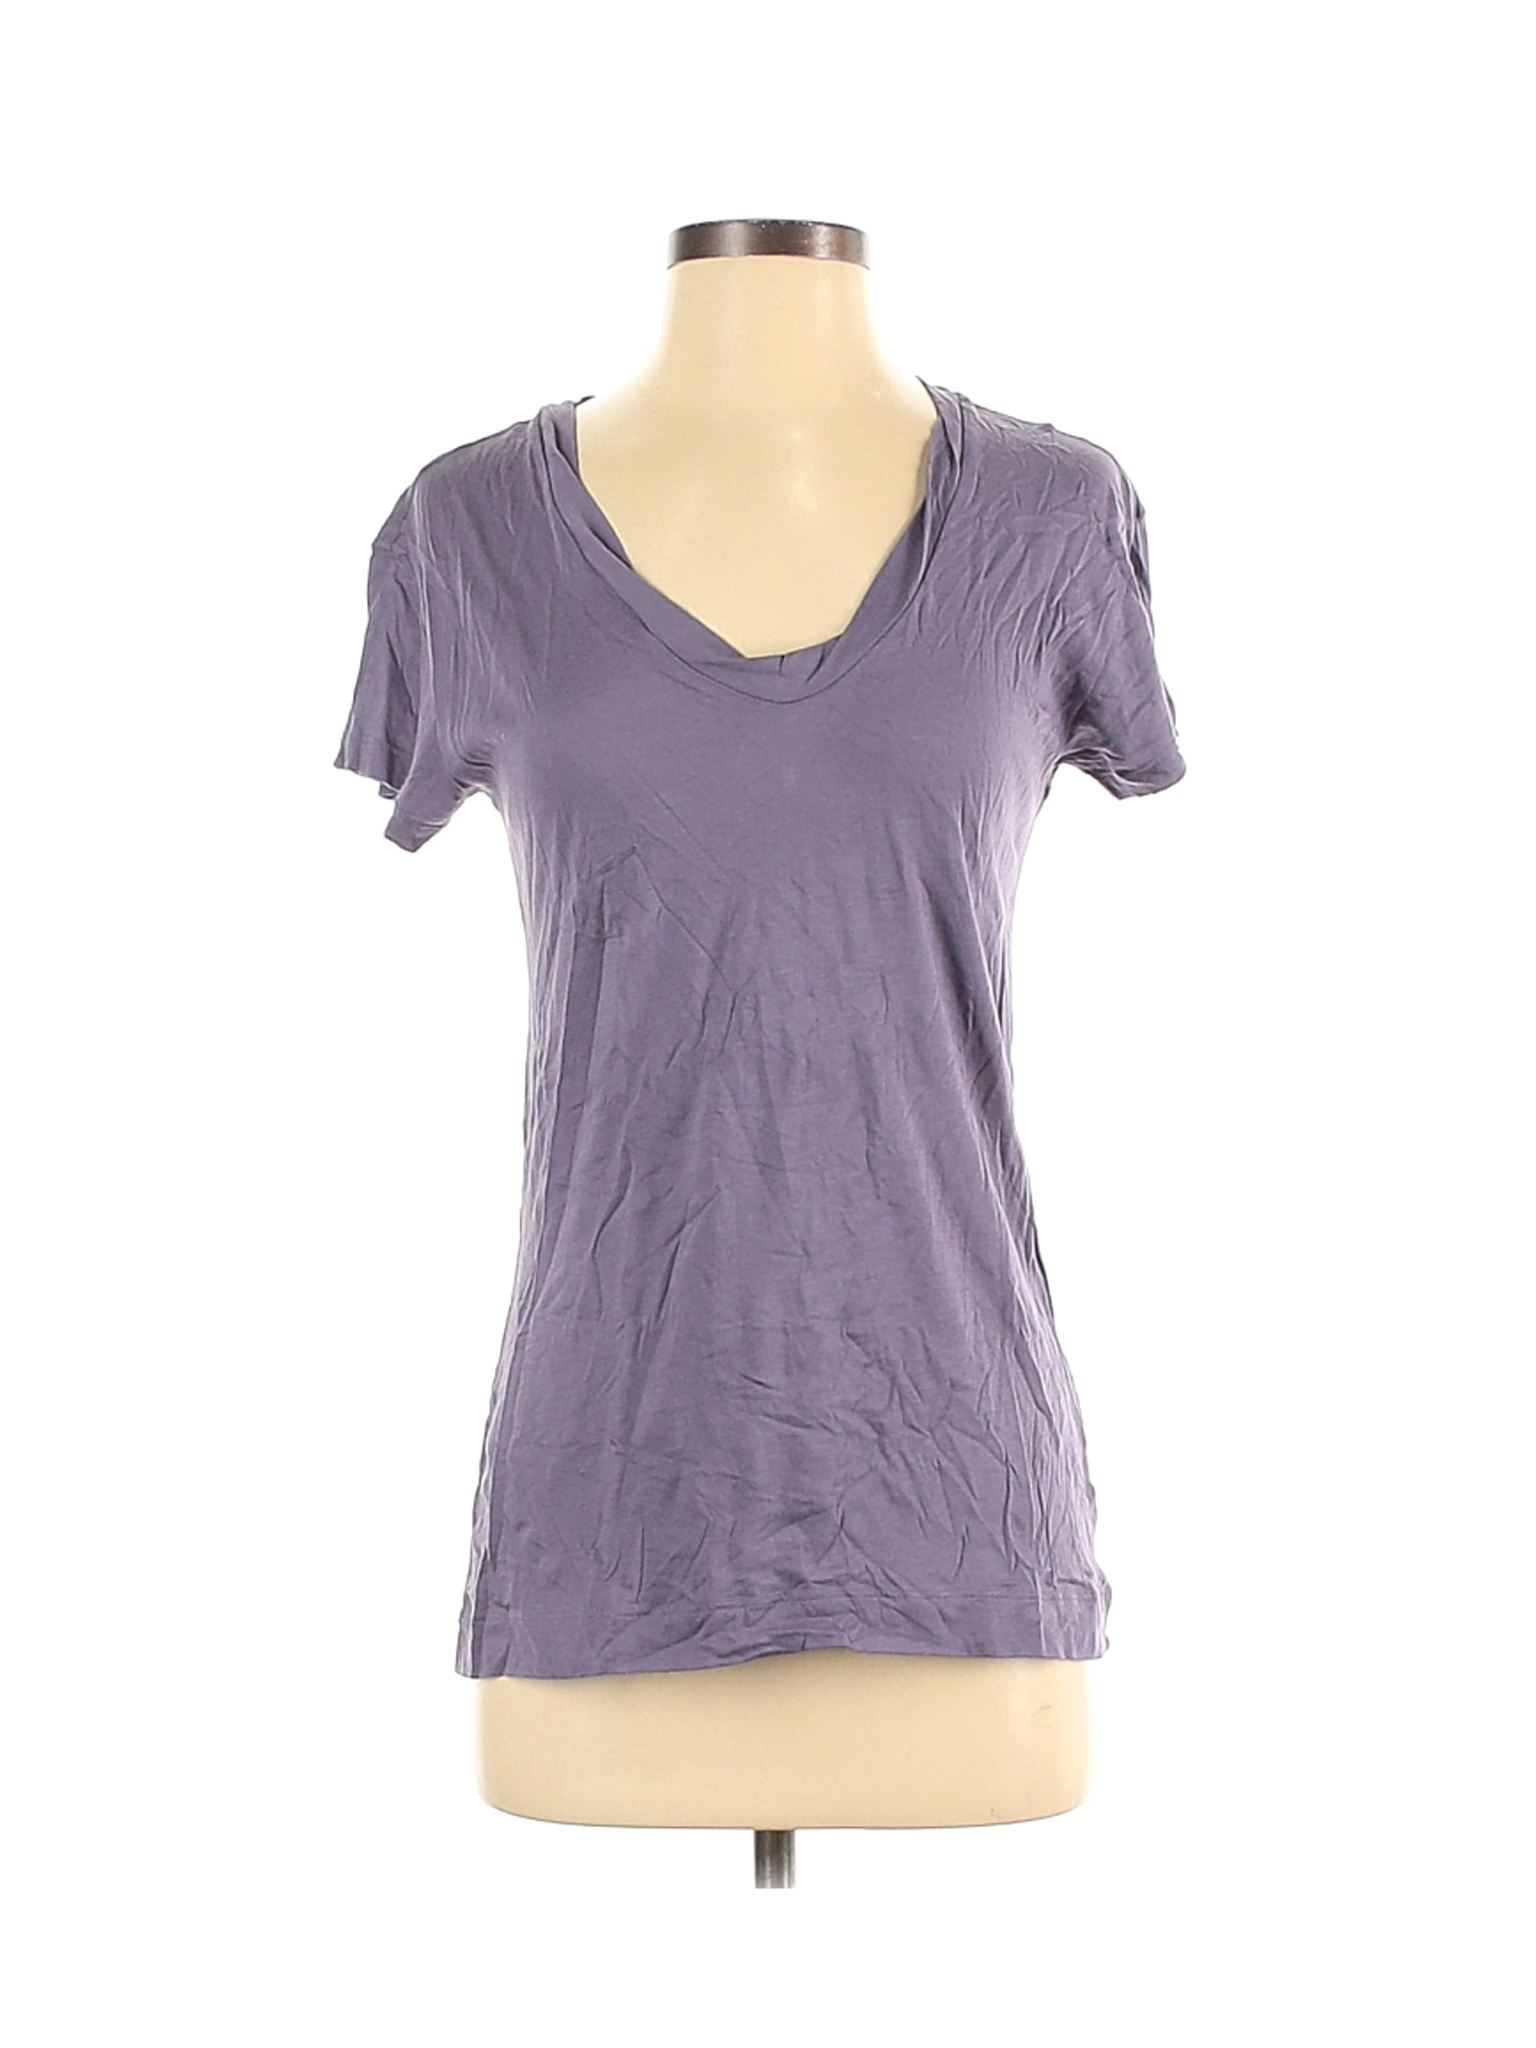 Theory Women Purple Short Sleeve T-Shirt P | eBay